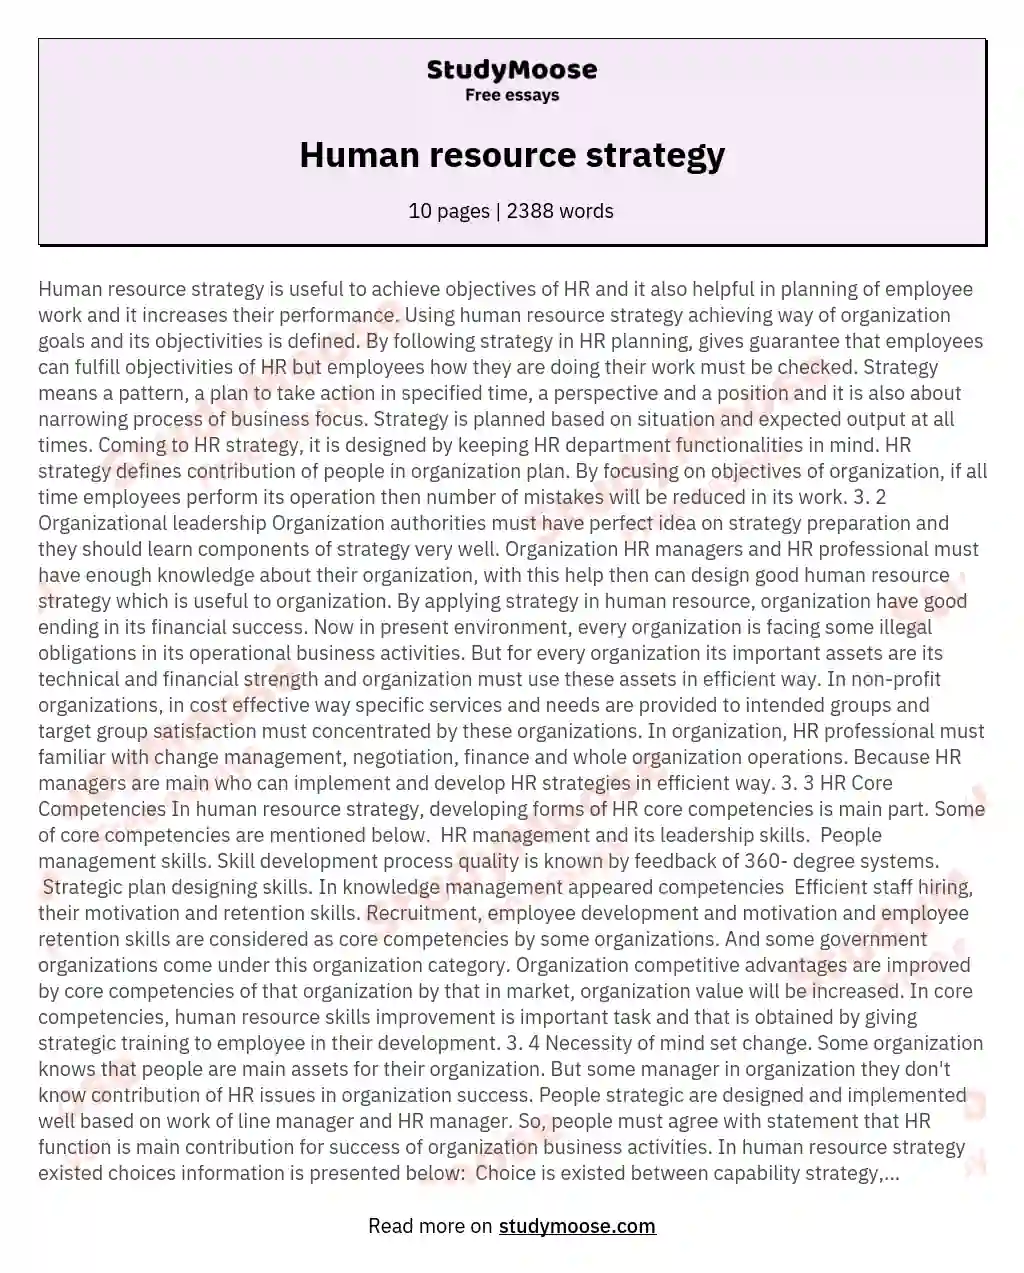 Human resource strategy essay